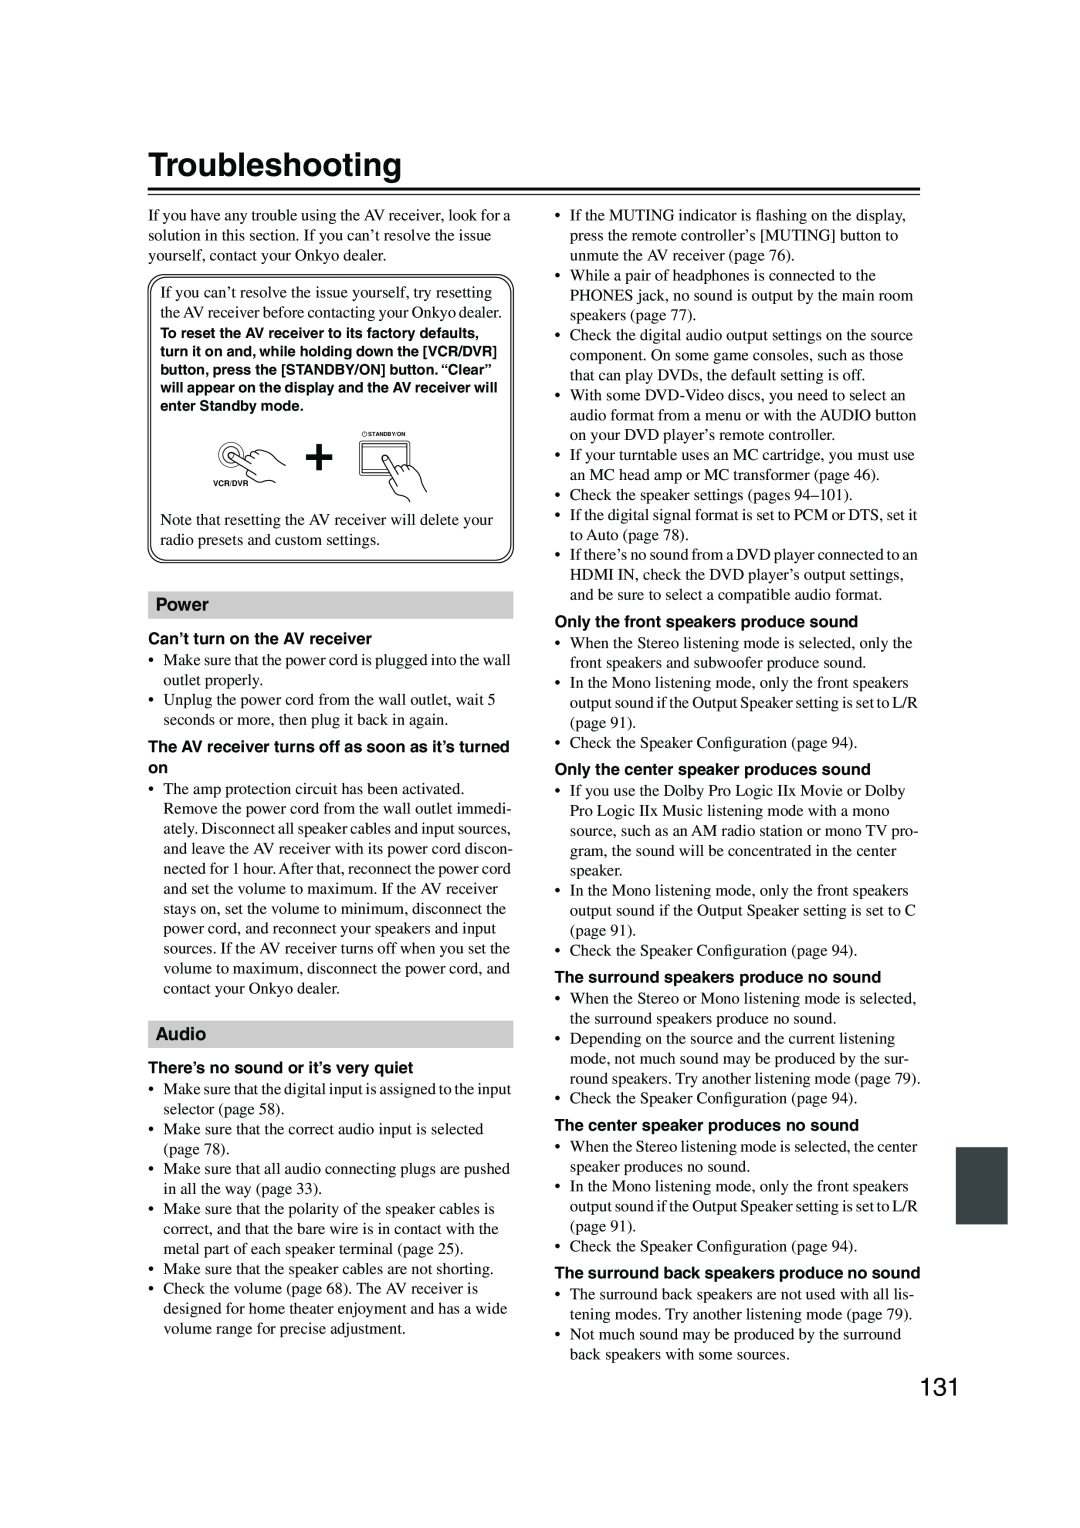 Onkyo TX-NR905 instruction manual Troubleshooting, Power, Audio 